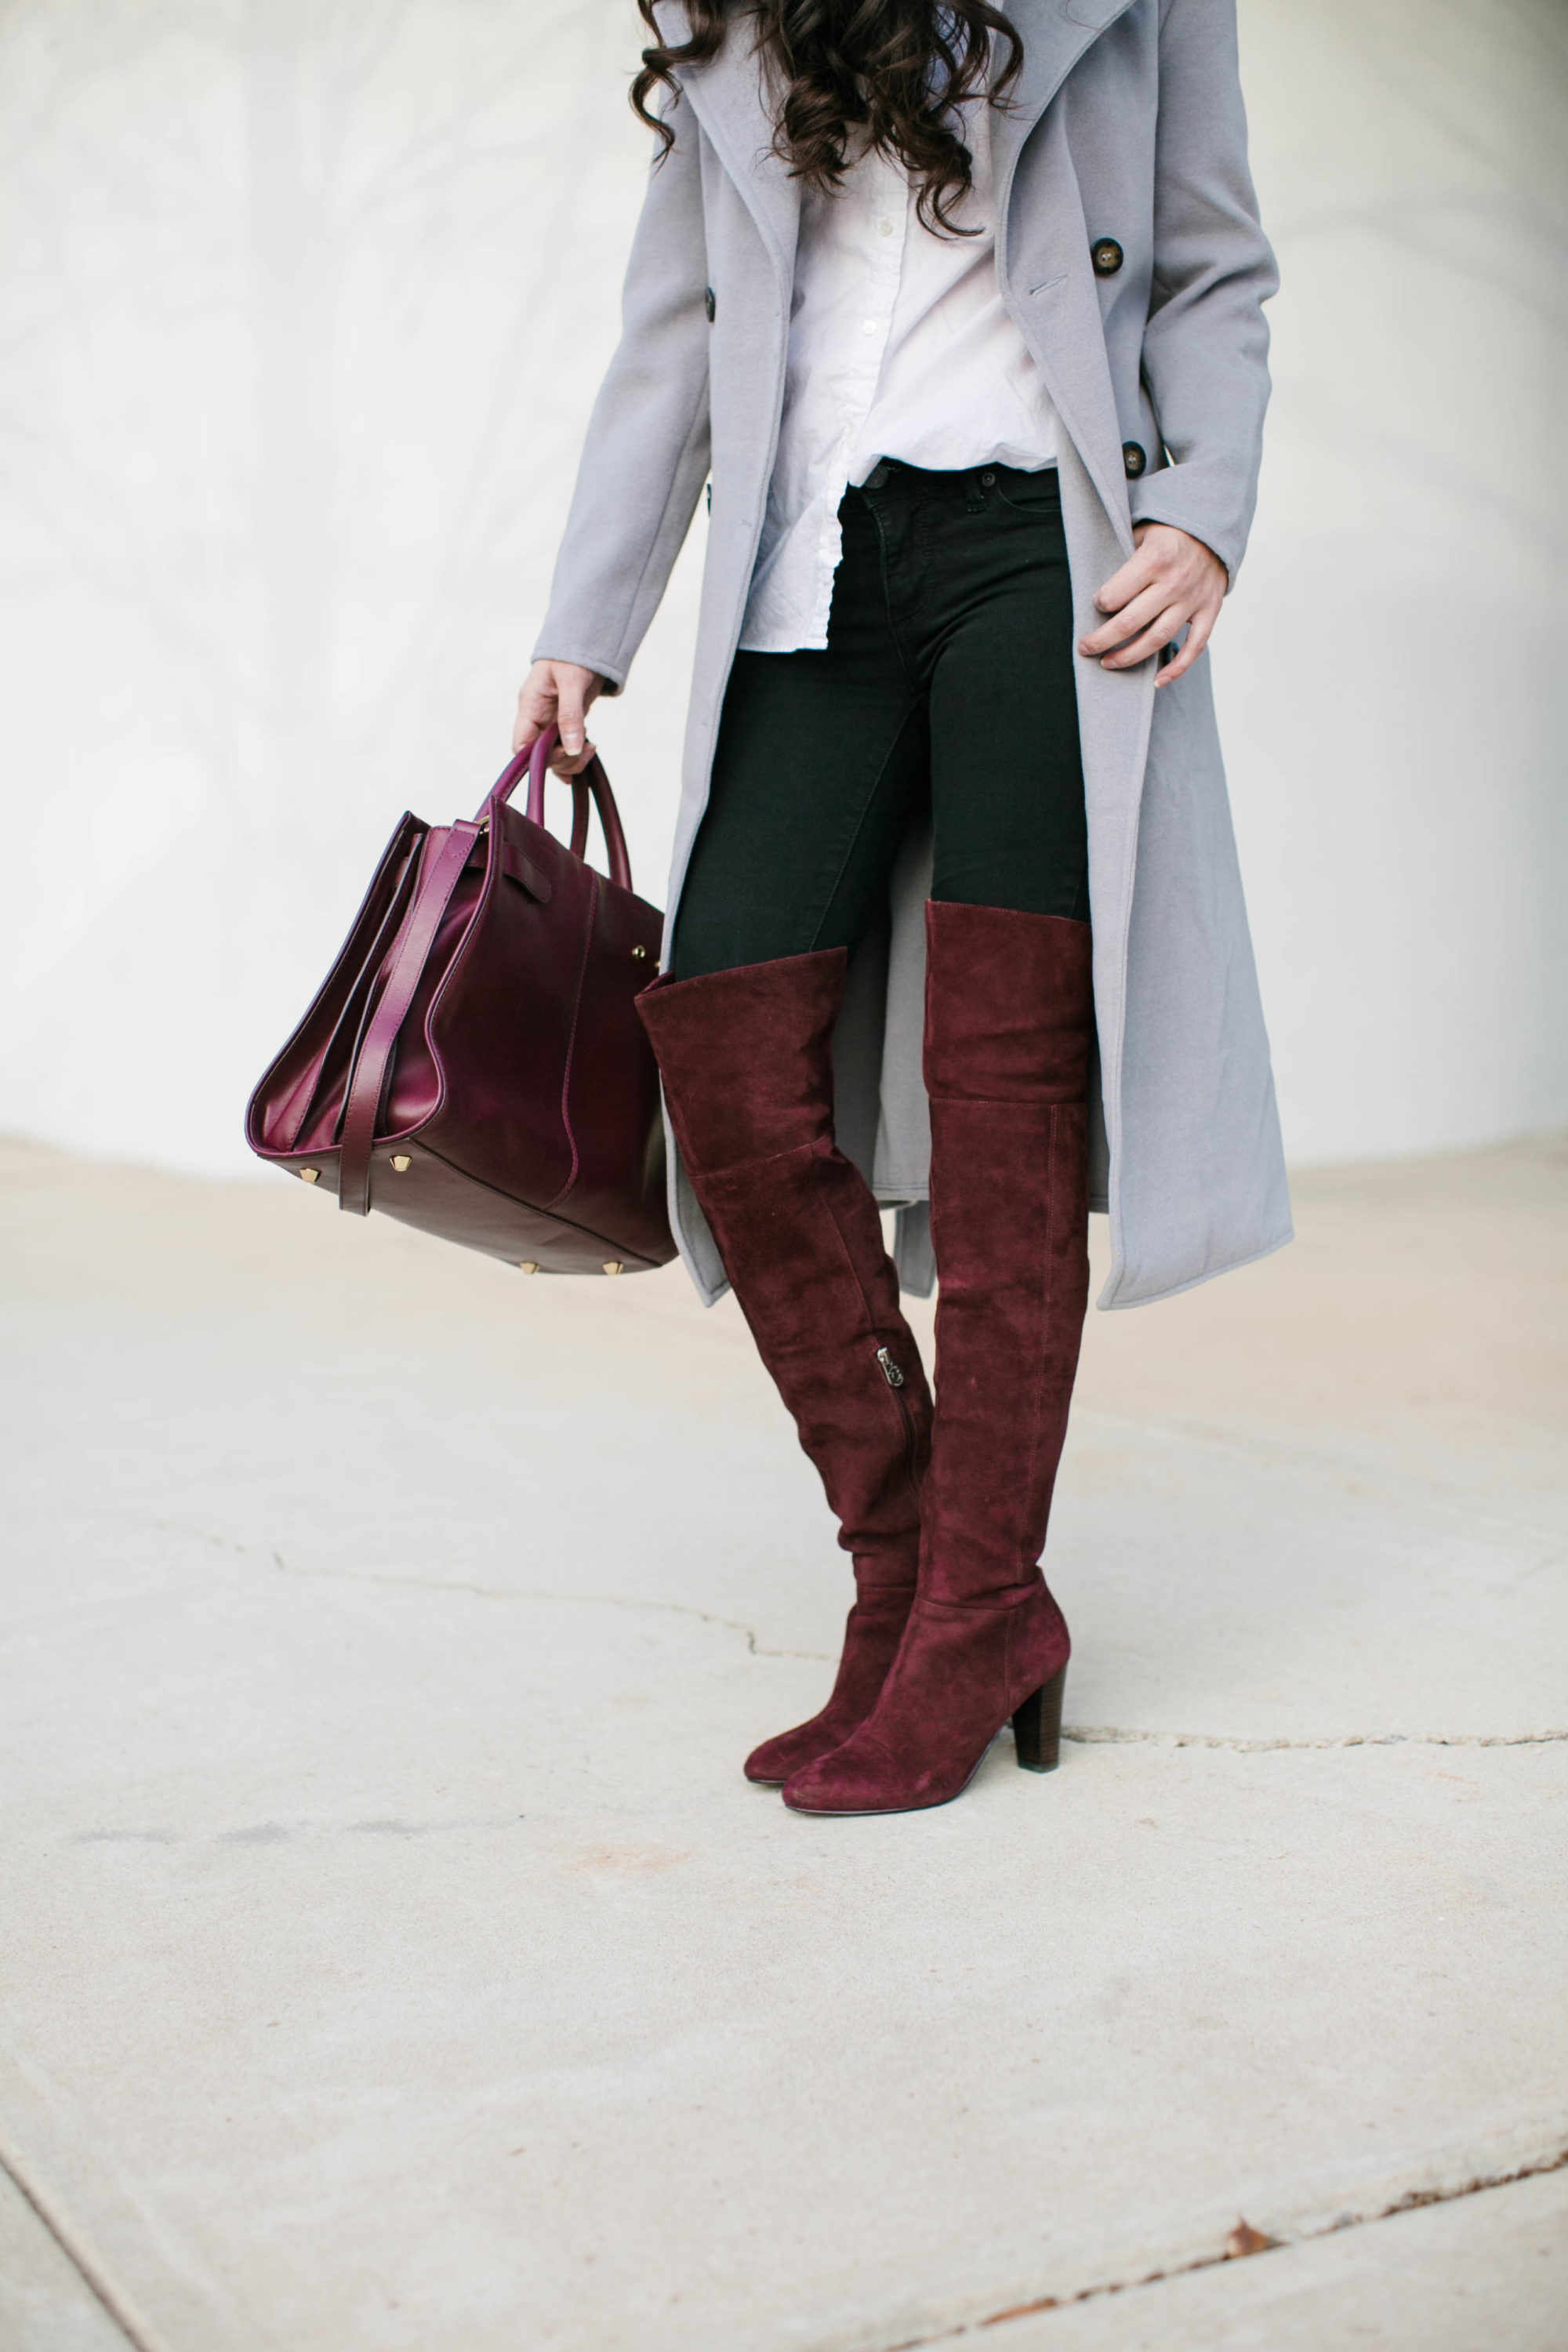 wine otk boots, wine over the knee boots, wearing color in the winter, wine winter wardrobe, grey winter coat, merlot lip color